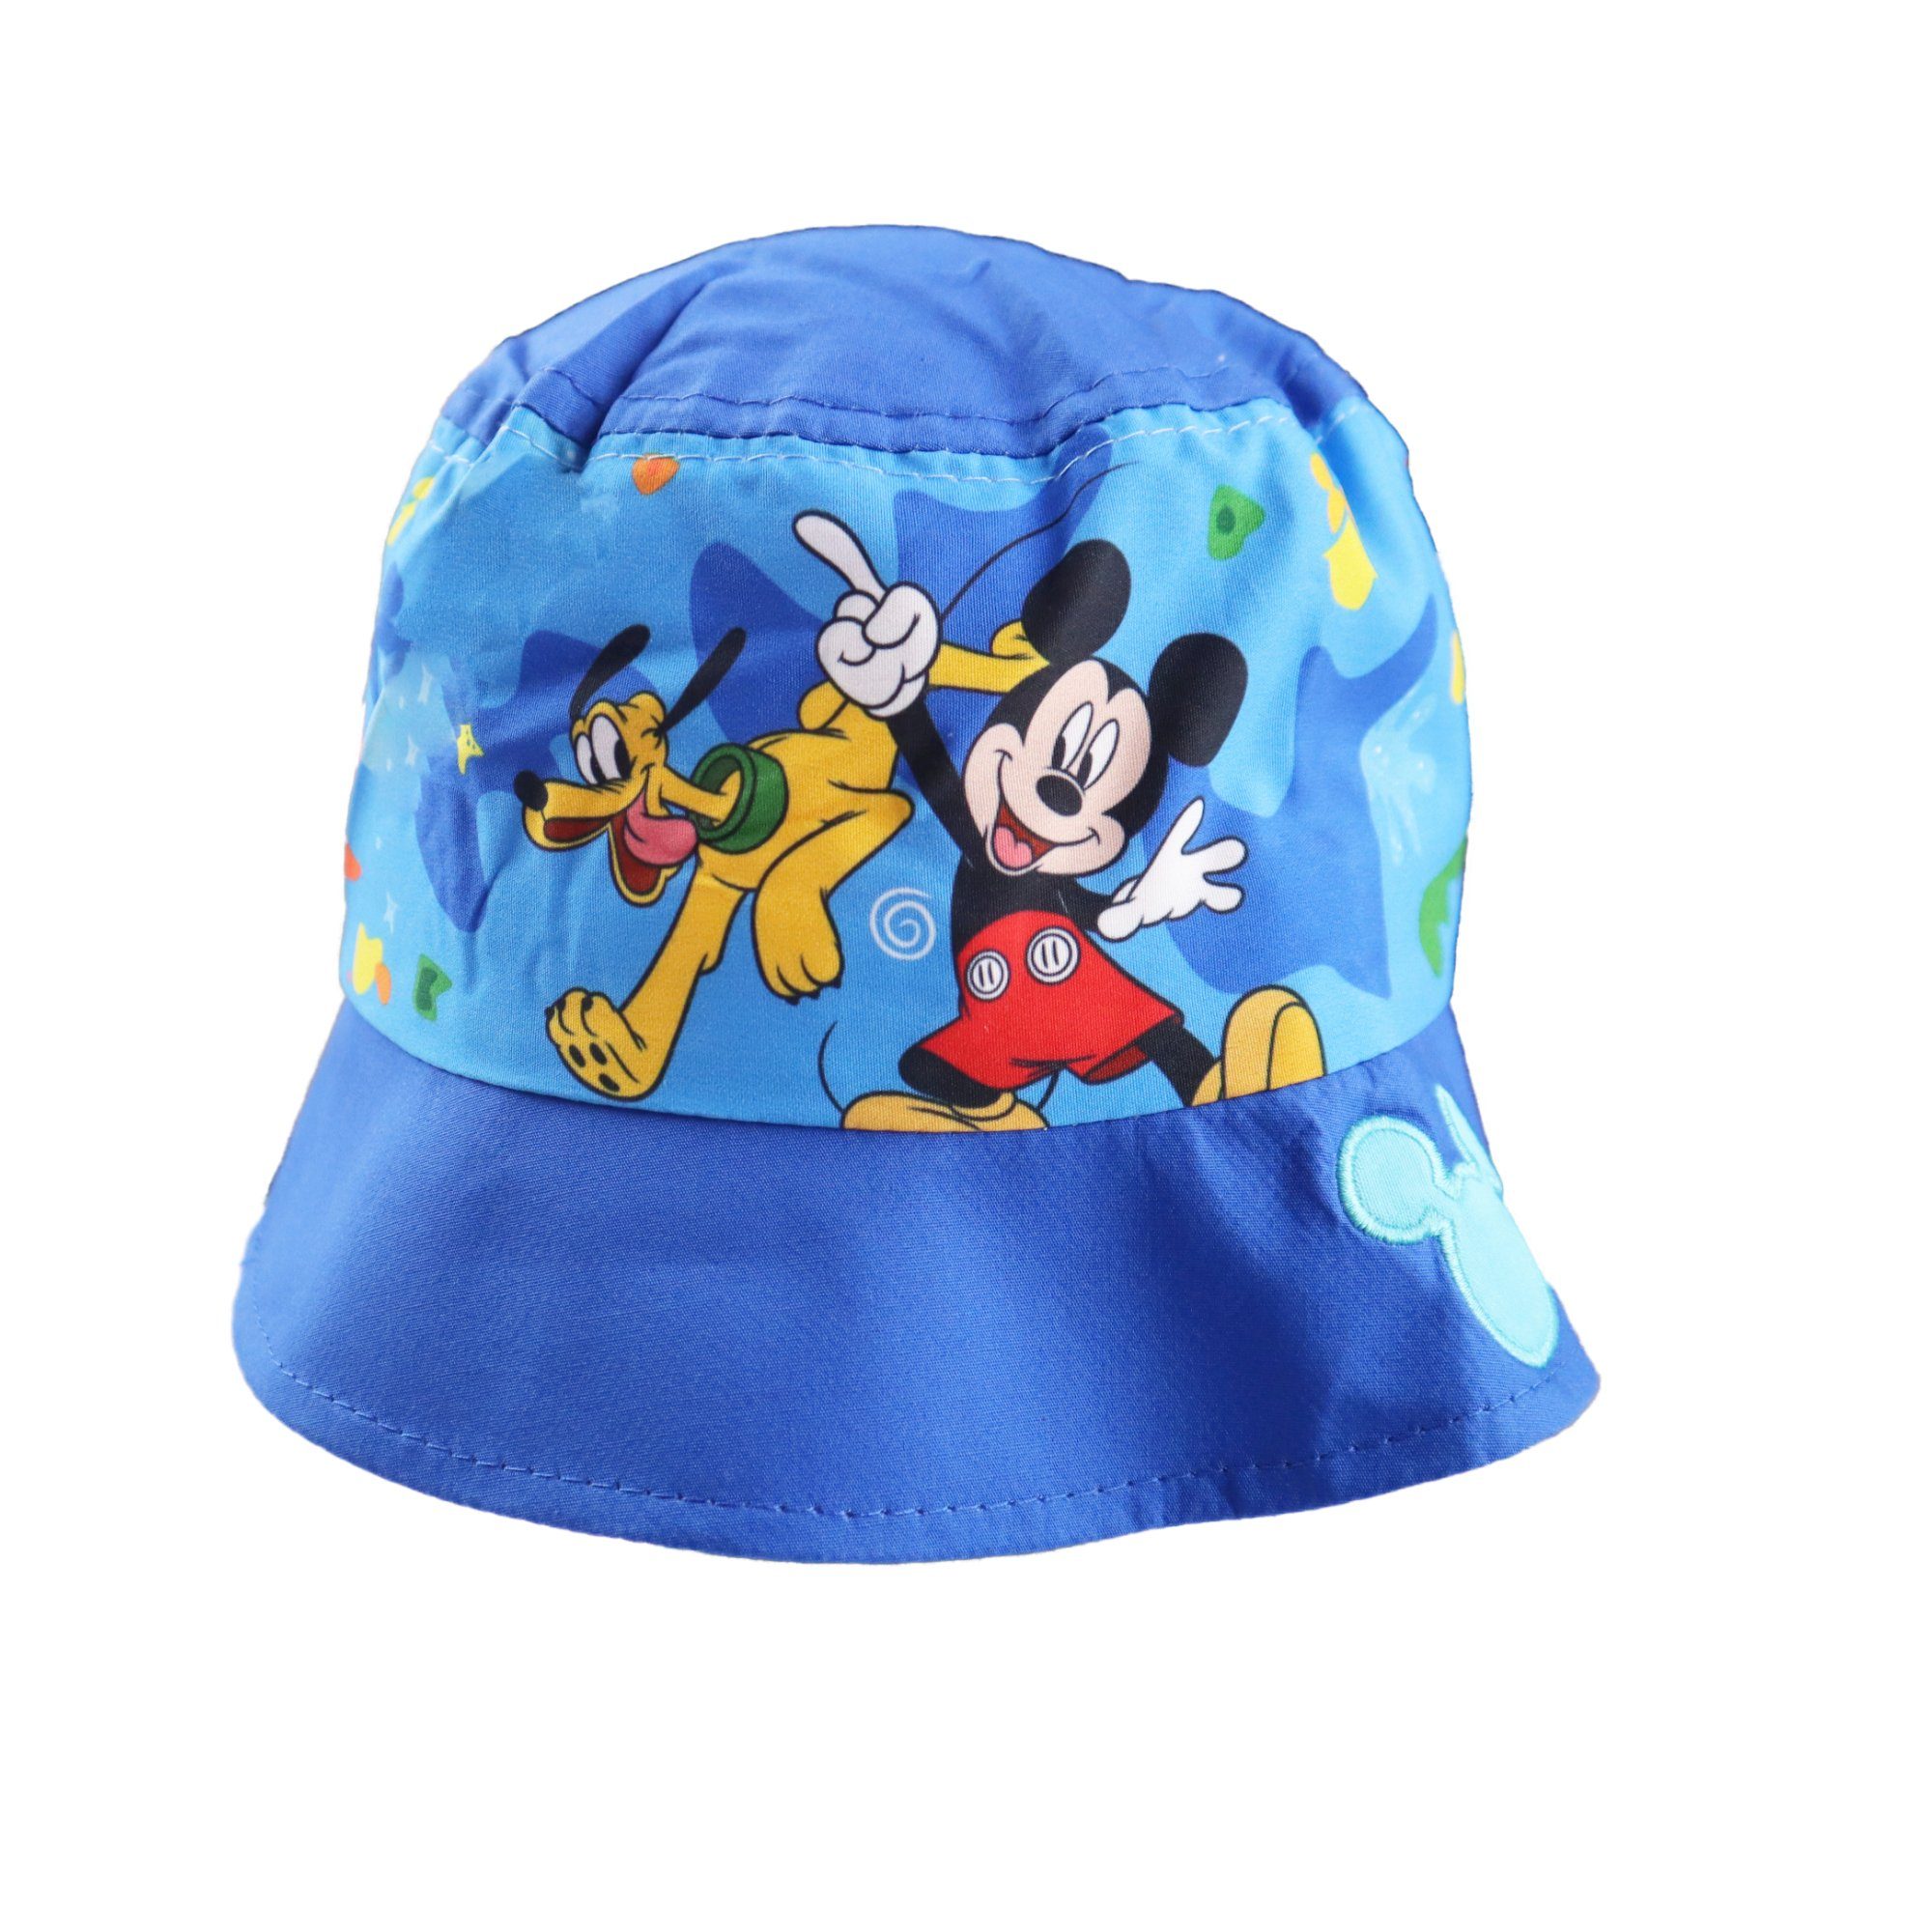 Disney Mickey Mouse Fischerhut Micky Maus Kinder Jungen Anglerhut Hut Gr. 52 bis 54 Dunkelblau